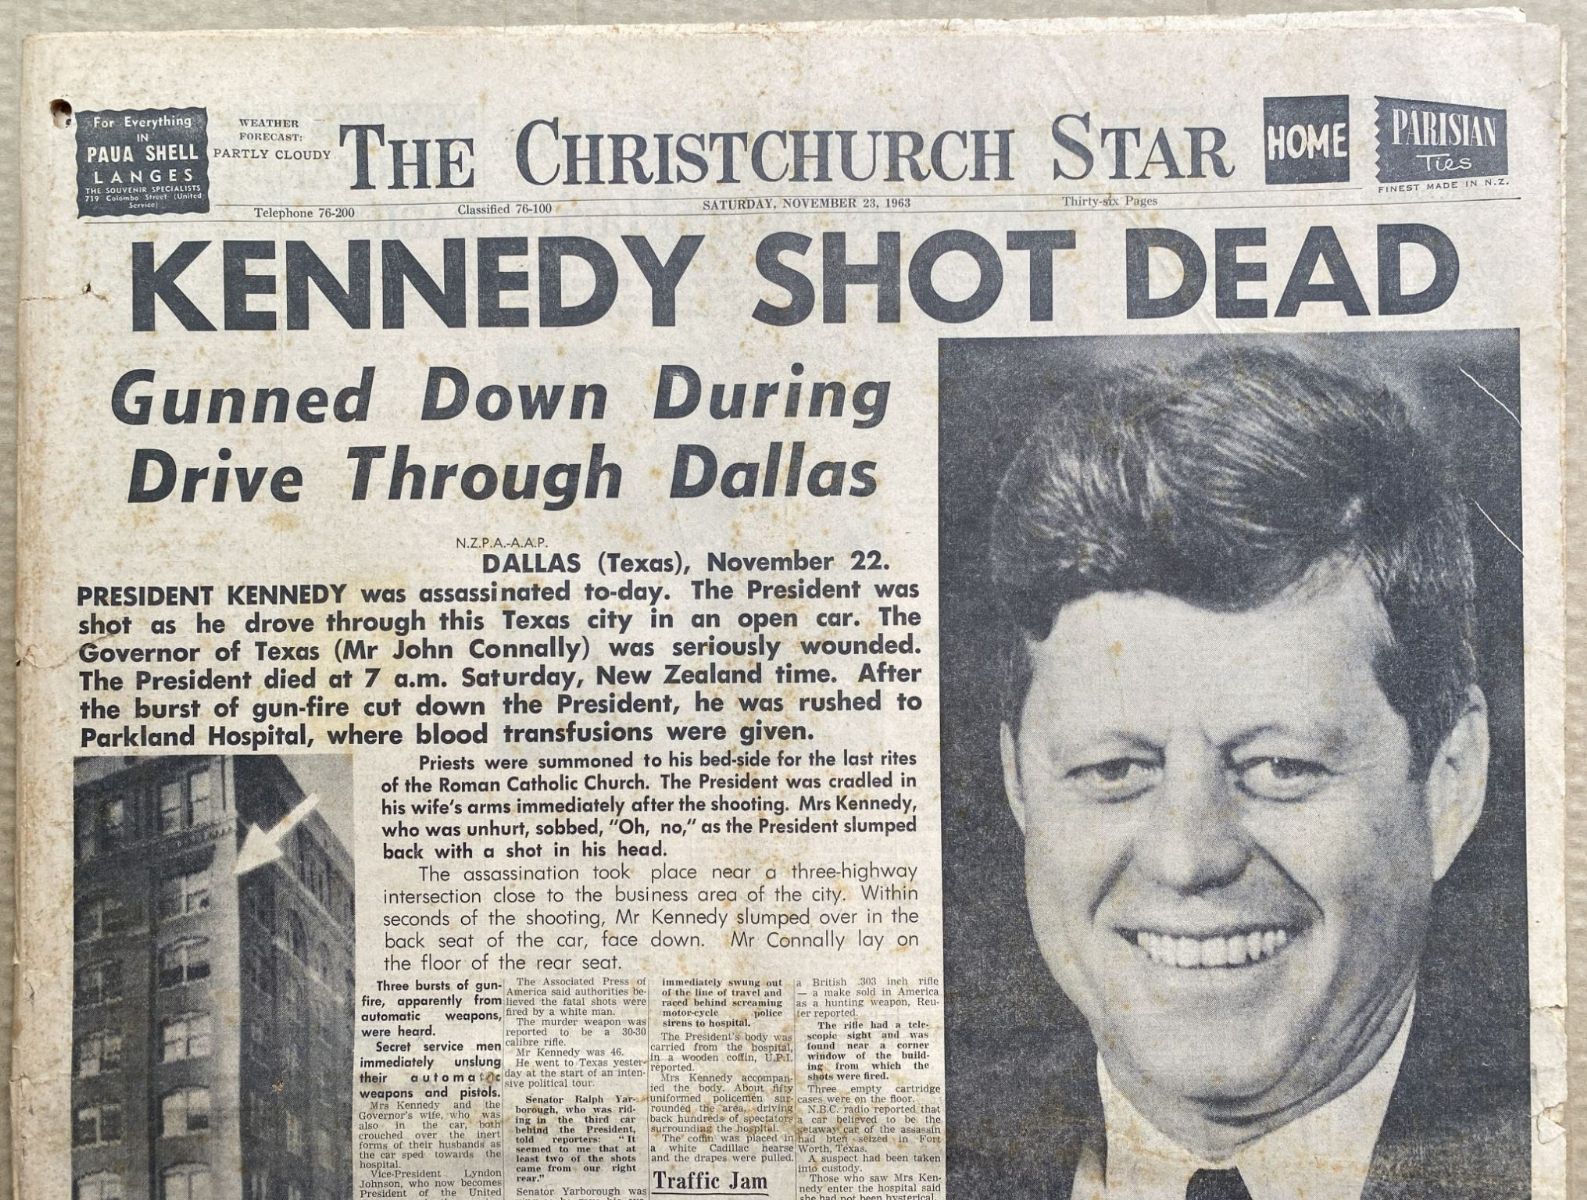 OLD NEWSPAPER: The Christchurch Star, 23 November 1963 - JFK Assassination